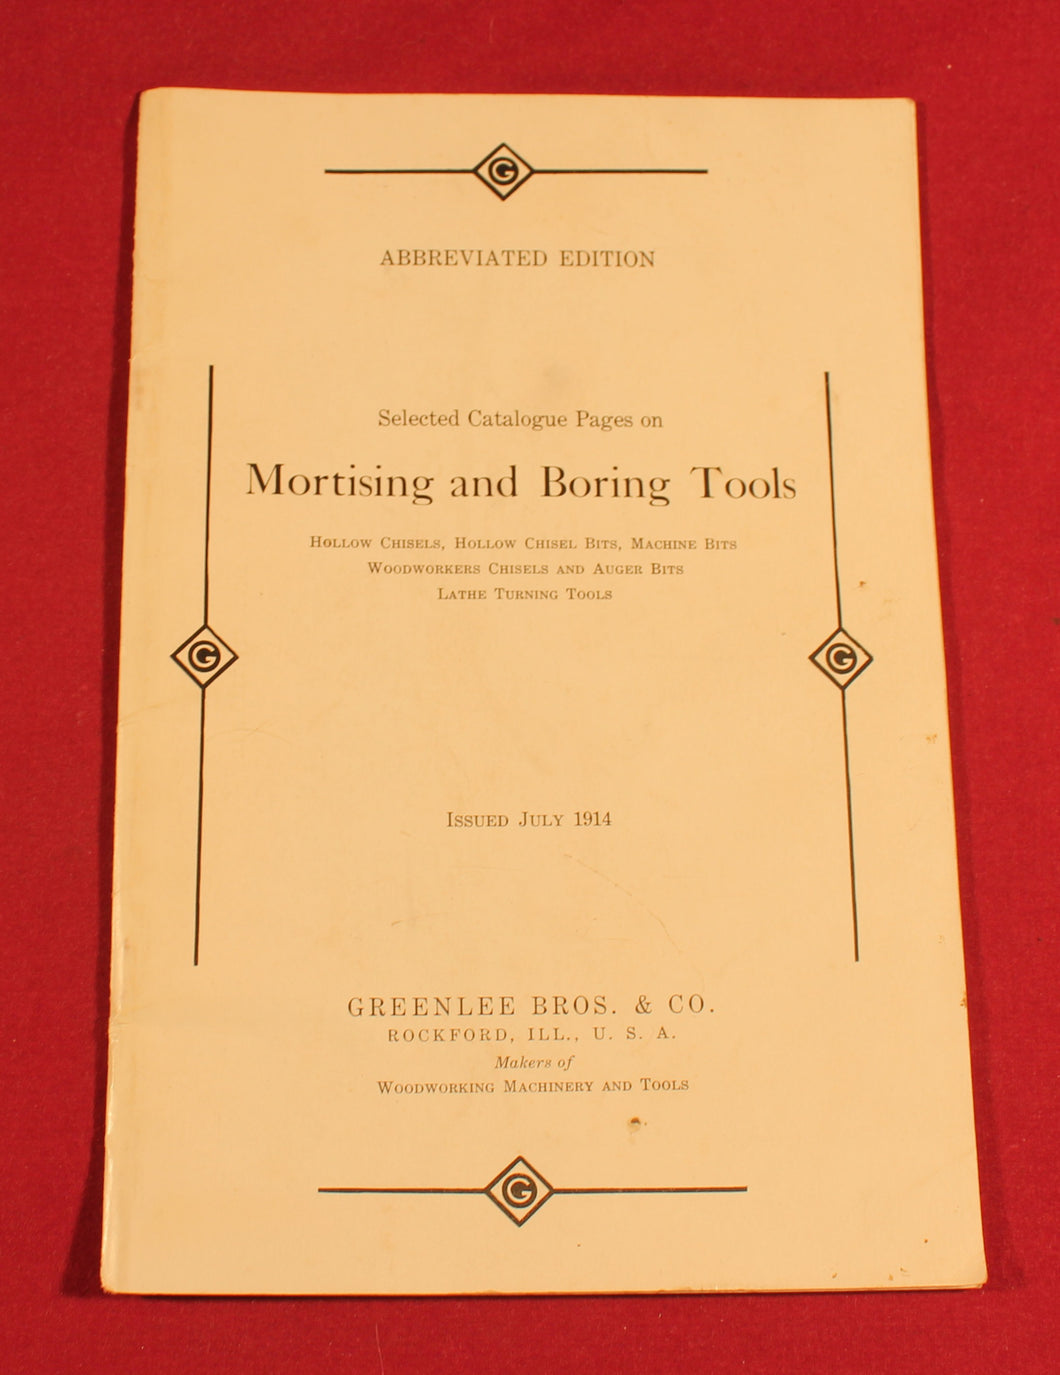 Vintage and Original Greenlee Mortising and Boring Tools catalog 1914